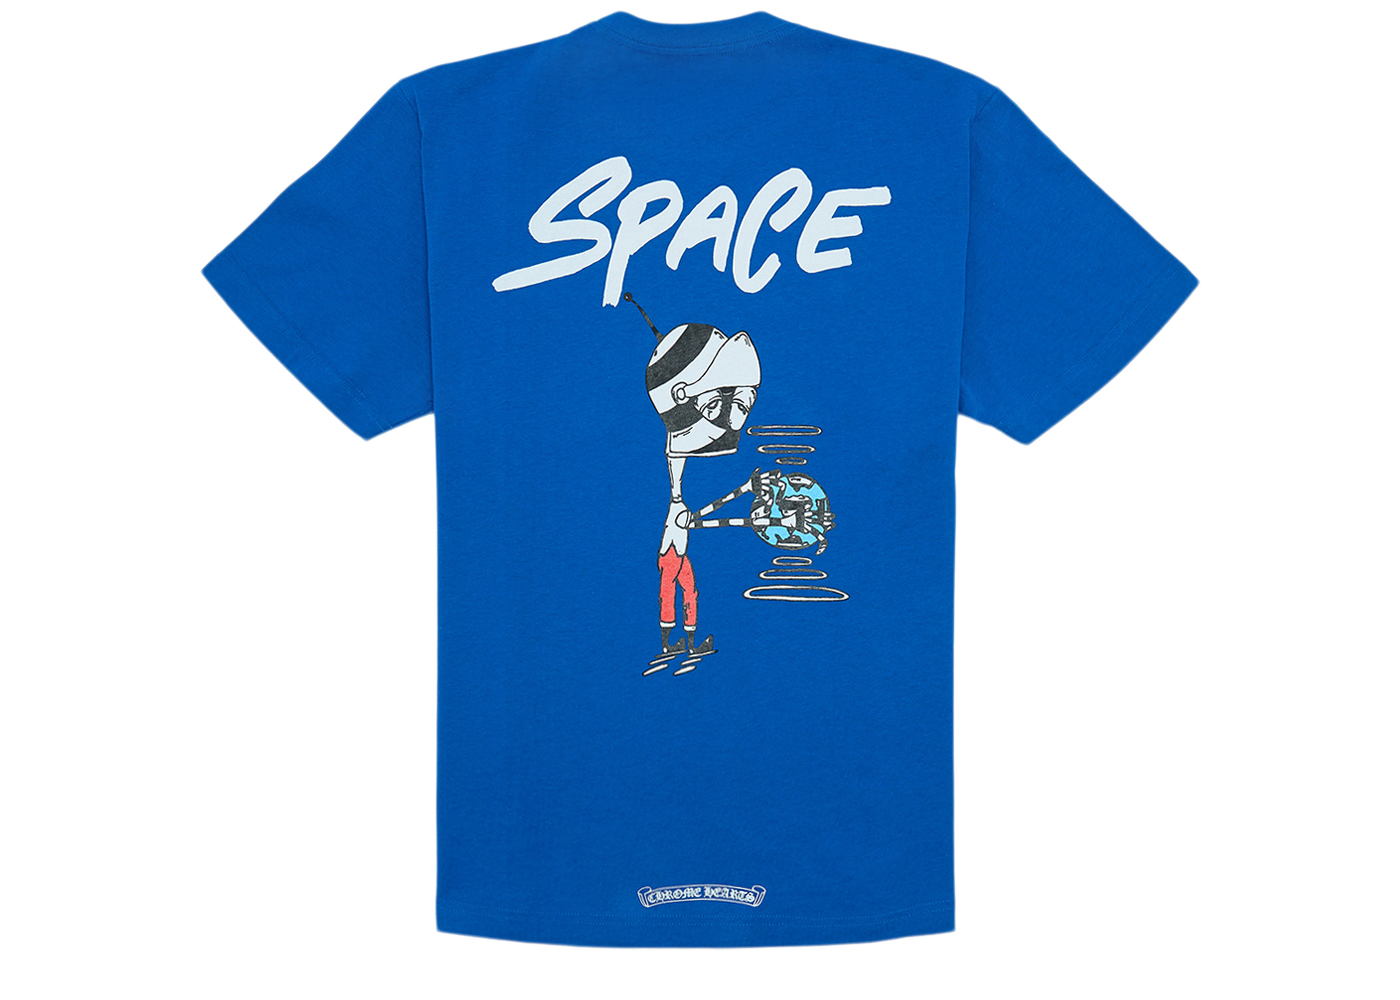 Chrome Hearts Matty Boy Space T-Shirt Blue